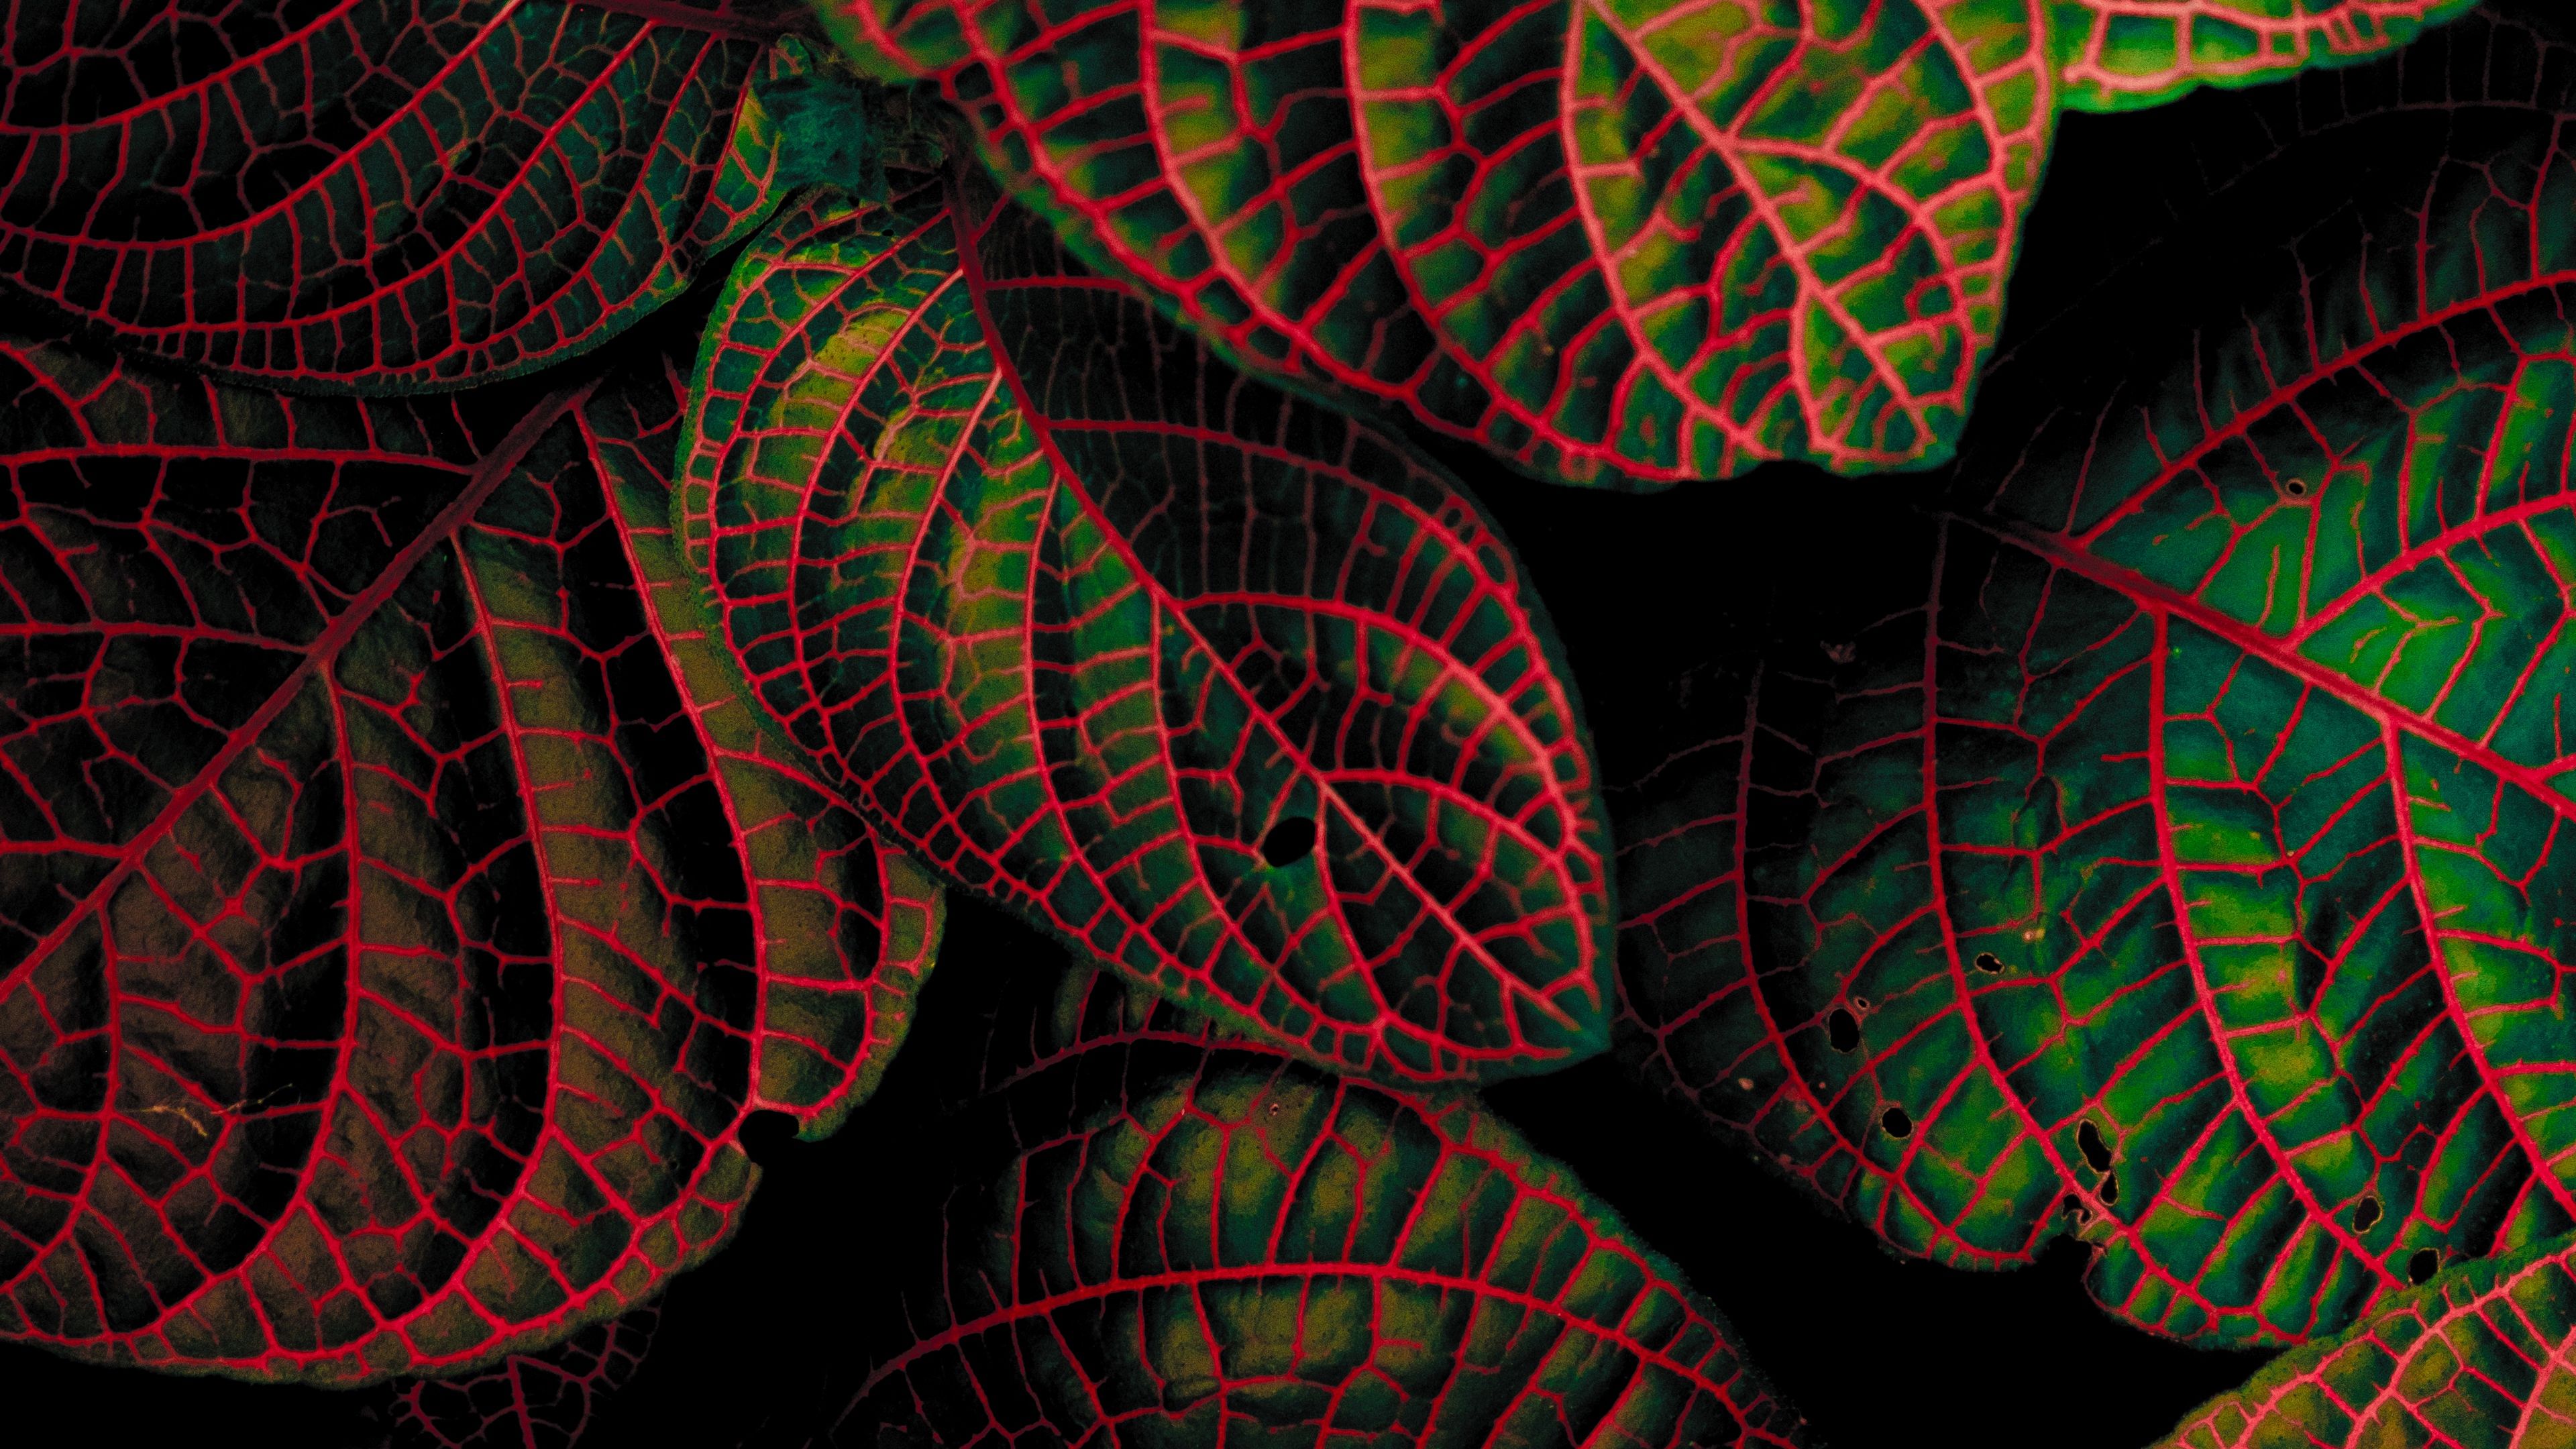 Download wallpaper 3840x2400 leaves plant green dark botanical garden 4k  ultra hd 1610 hd background